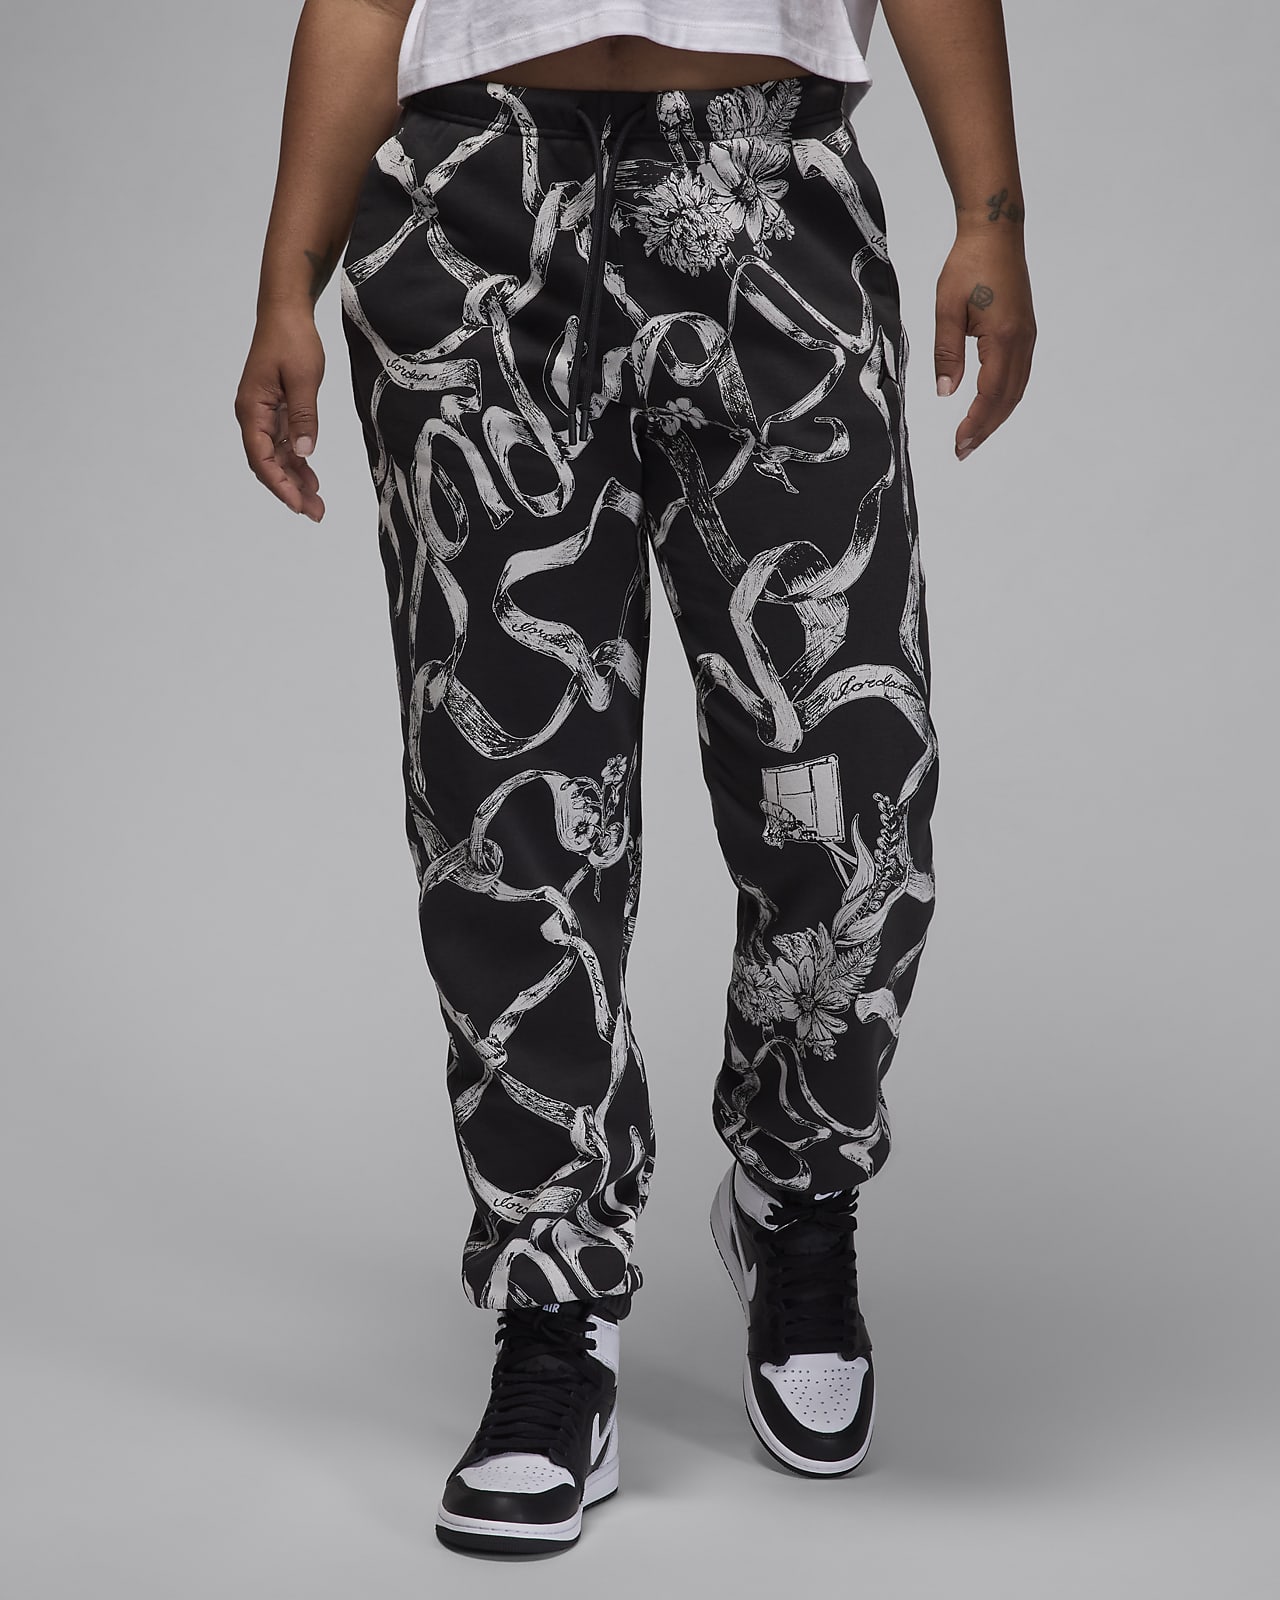 Jordan Brooklyn Fleece Women's Printed Pants